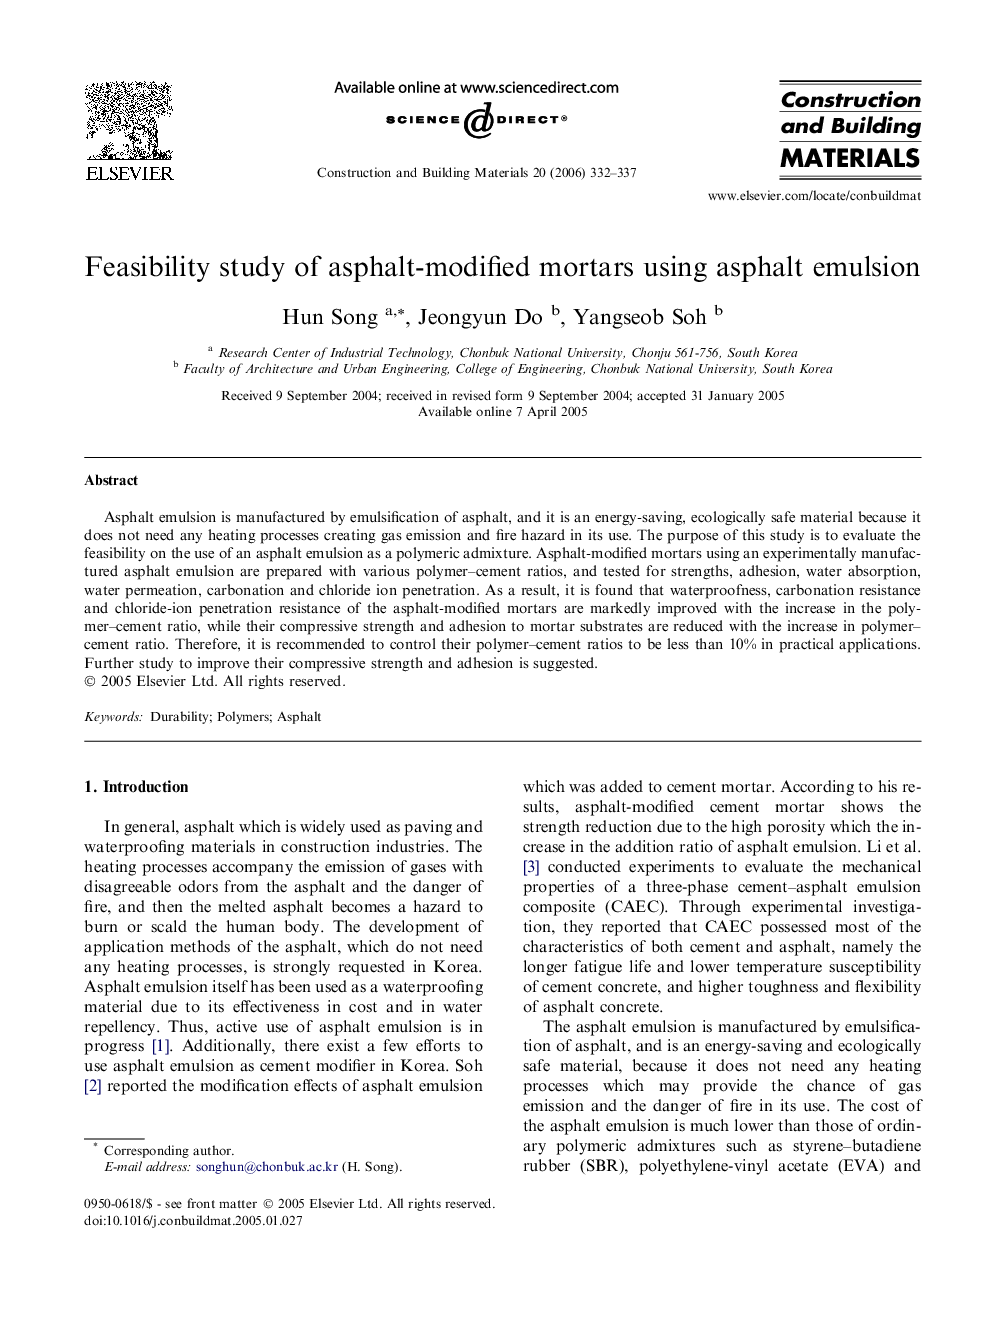 Feasibility study of asphalt-modified mortars using asphalt emulsion